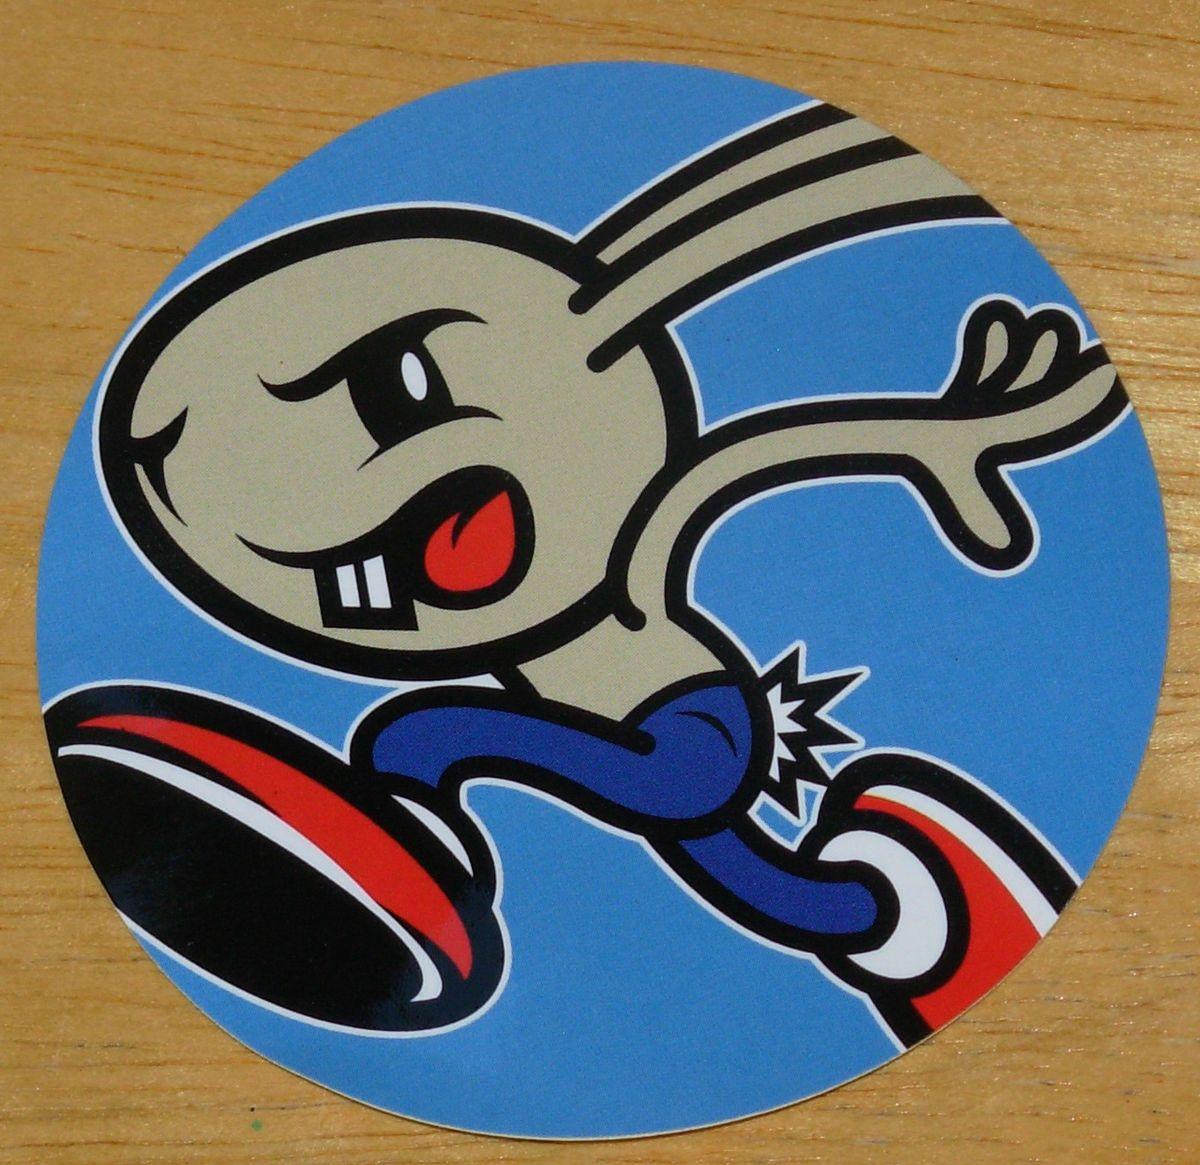 Cool Rabbit Logo - Blink 182 Circle Classic Rabbit Logo Sticker New not CD LP But Cool ...